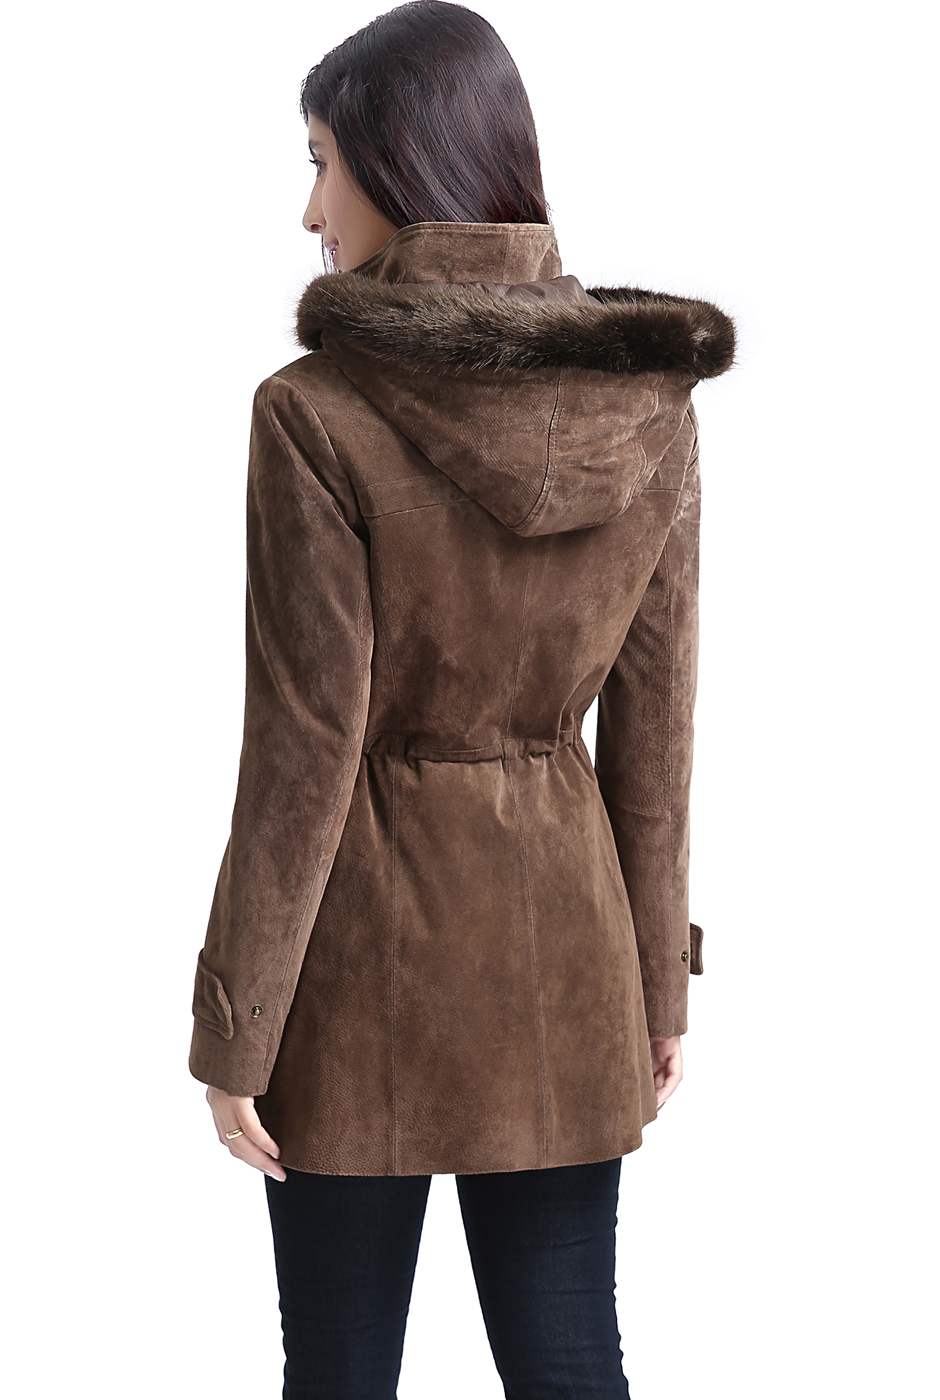 Women Chloe Suede Leather Hooded Parka Coat (Regular & Plus Size & Petite) - image 5 of 5